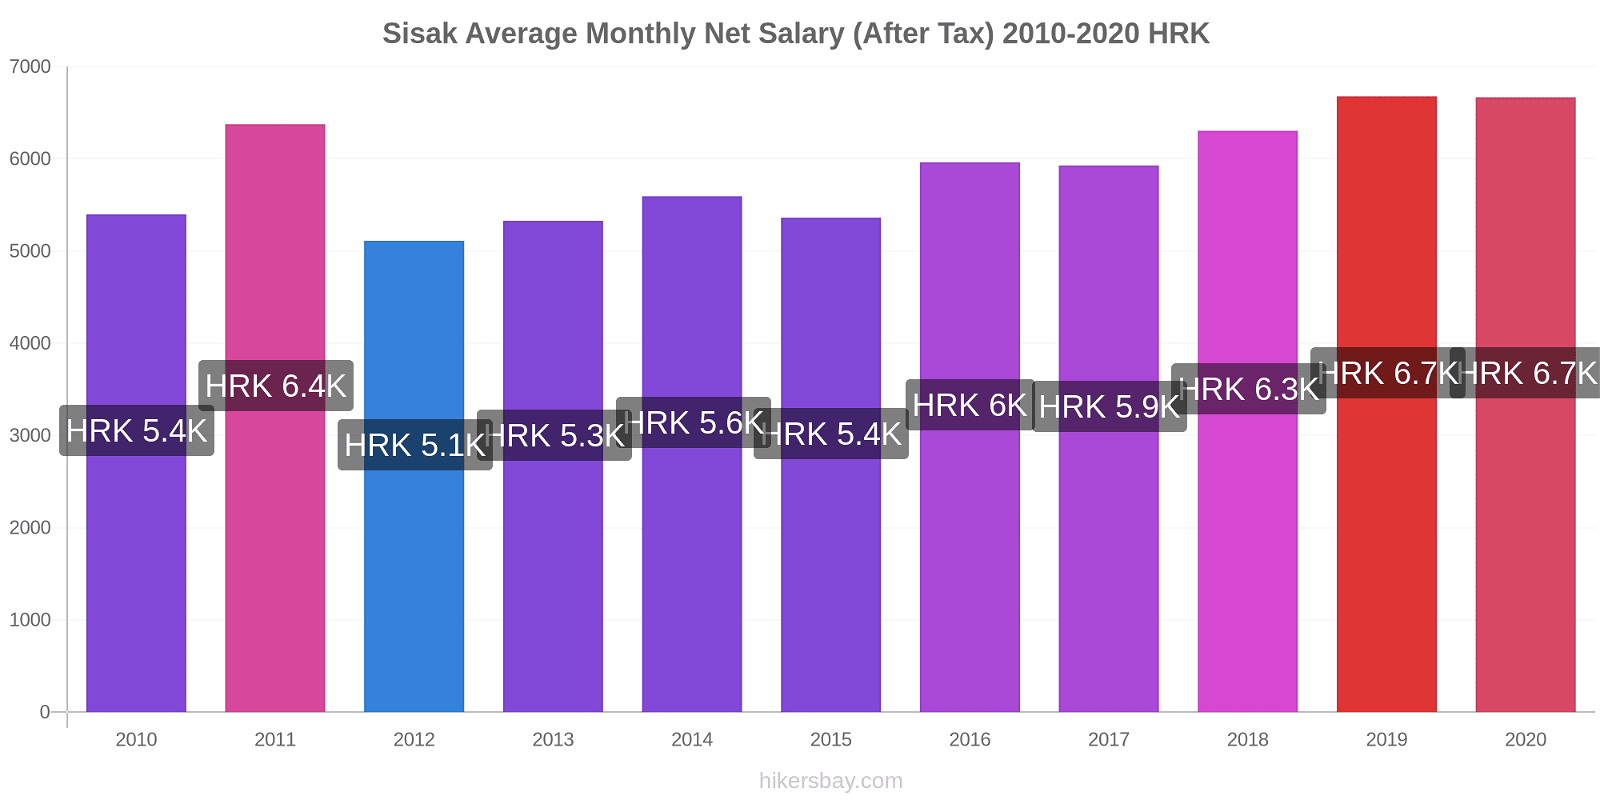 Sisak price changes Average Monthly Net Salary (After Tax) hikersbay.com